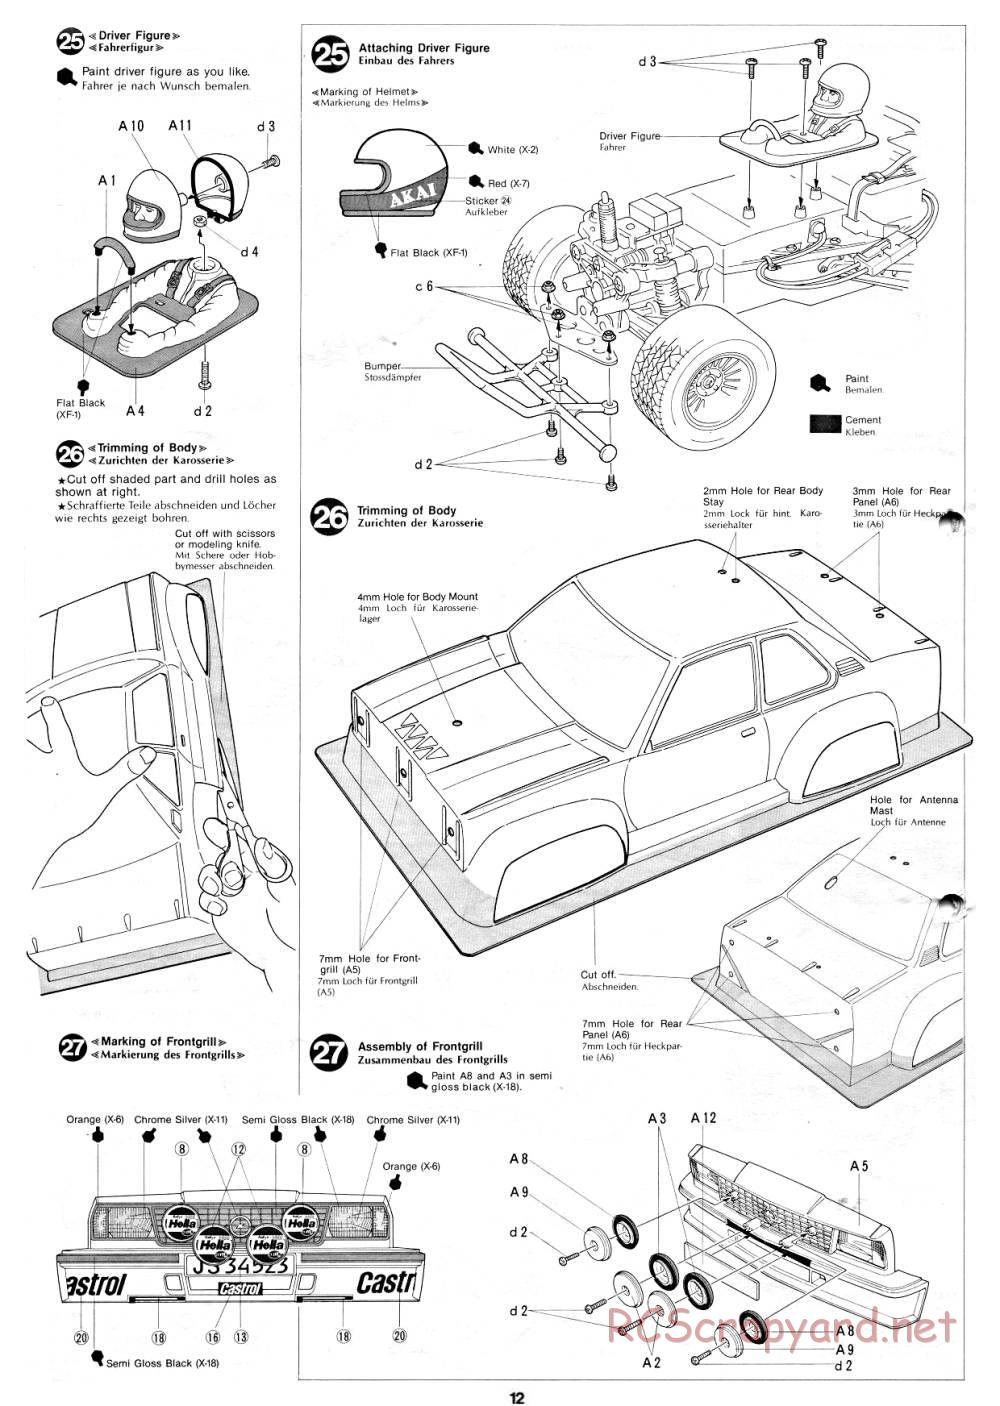 Tamiya - Opel Ascona 400 Rally - 58037 - Manual - Page 12